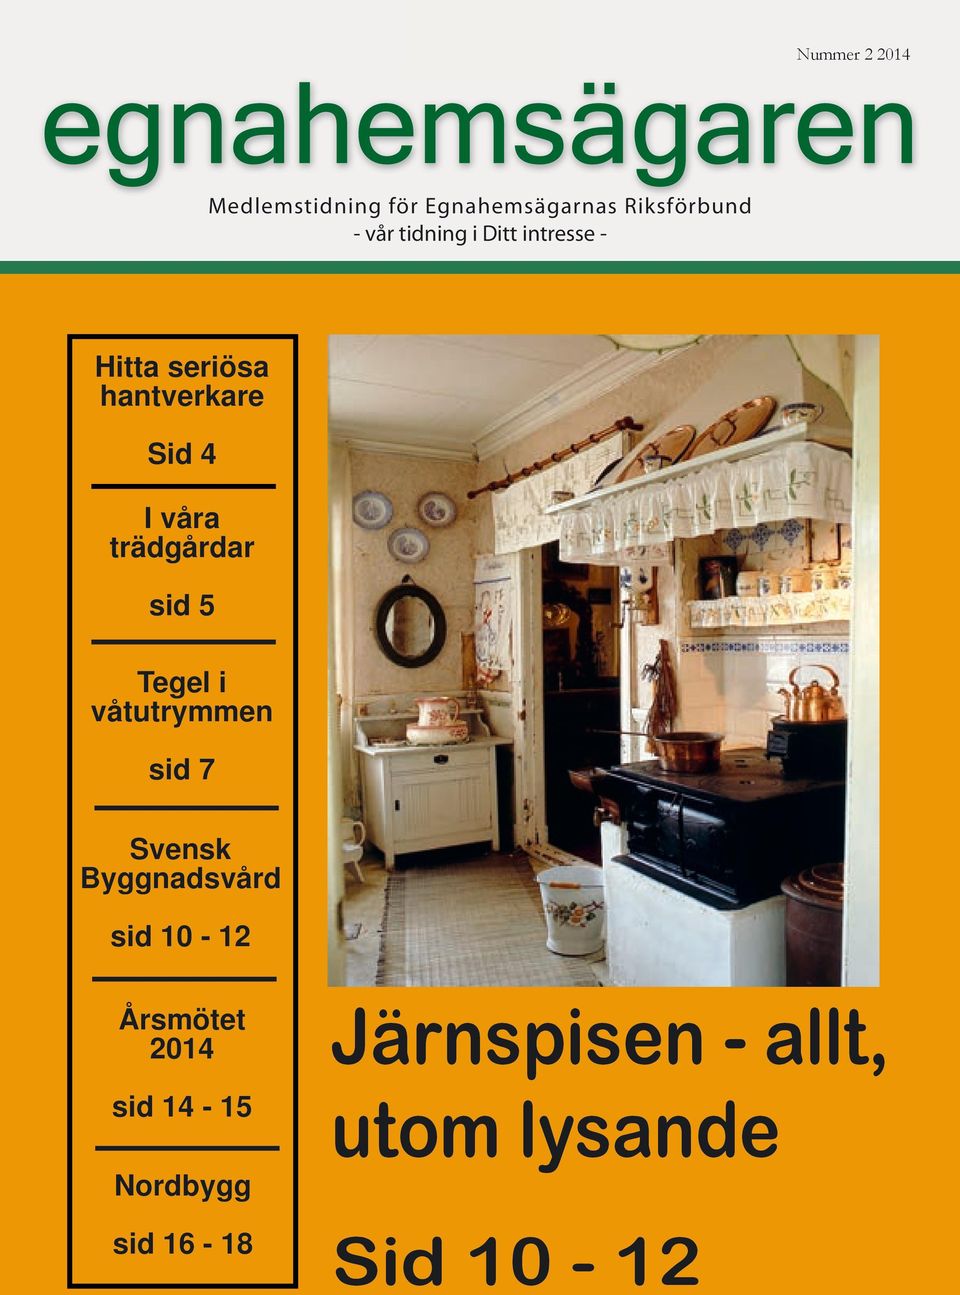 våtutrymmen sid 7 Svensk Byggnadsvård sid 10-12 Årsmötet 2014 sid 14-15